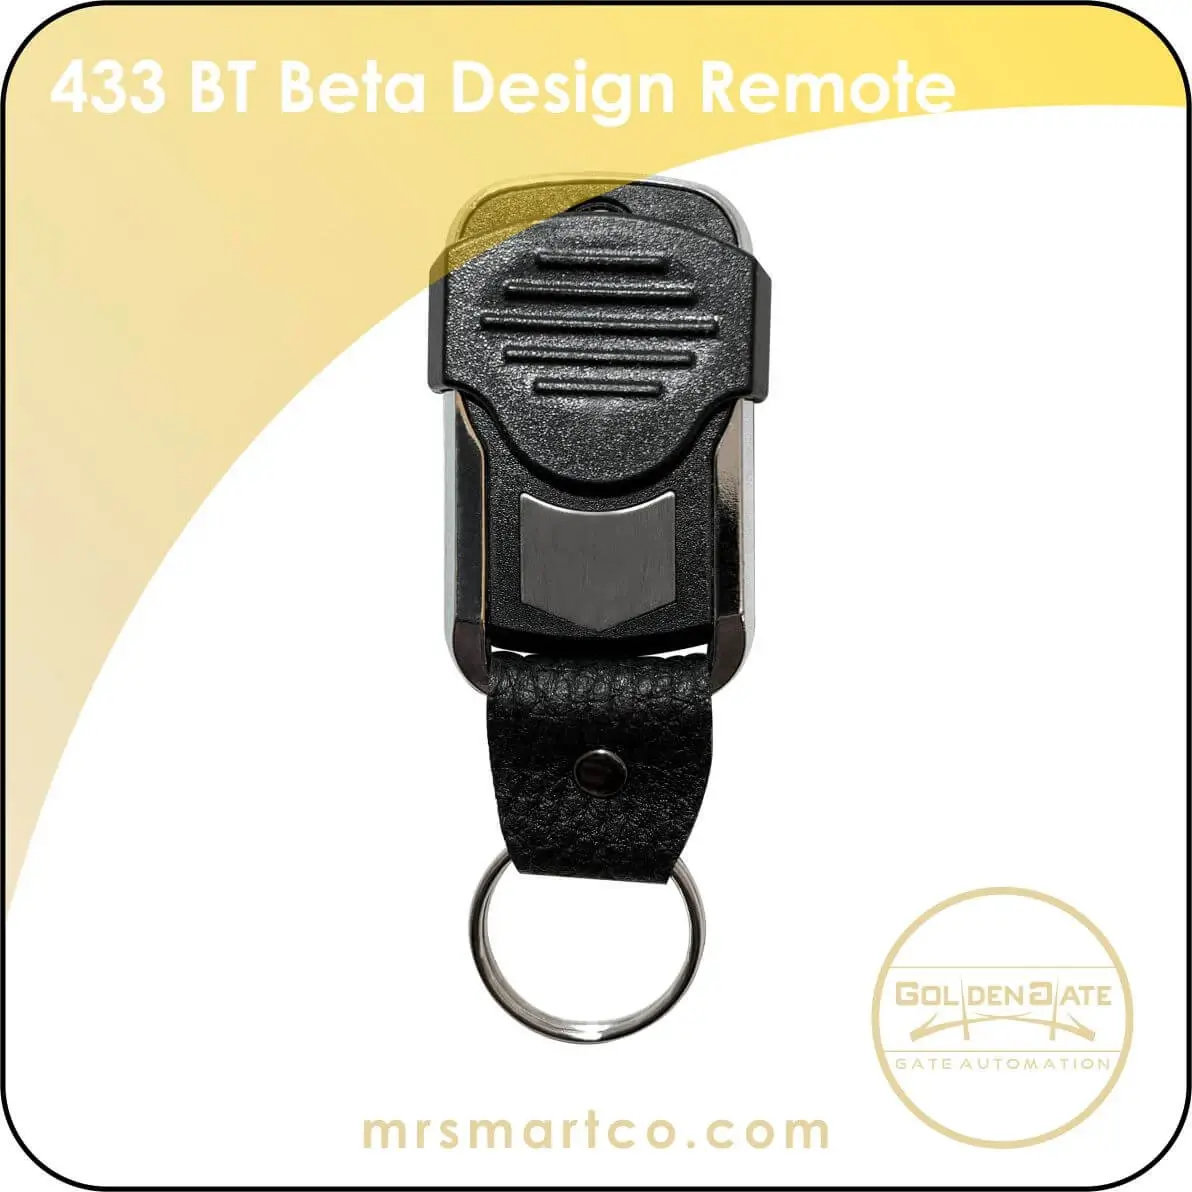 Bluetooth Remote 433 beta design